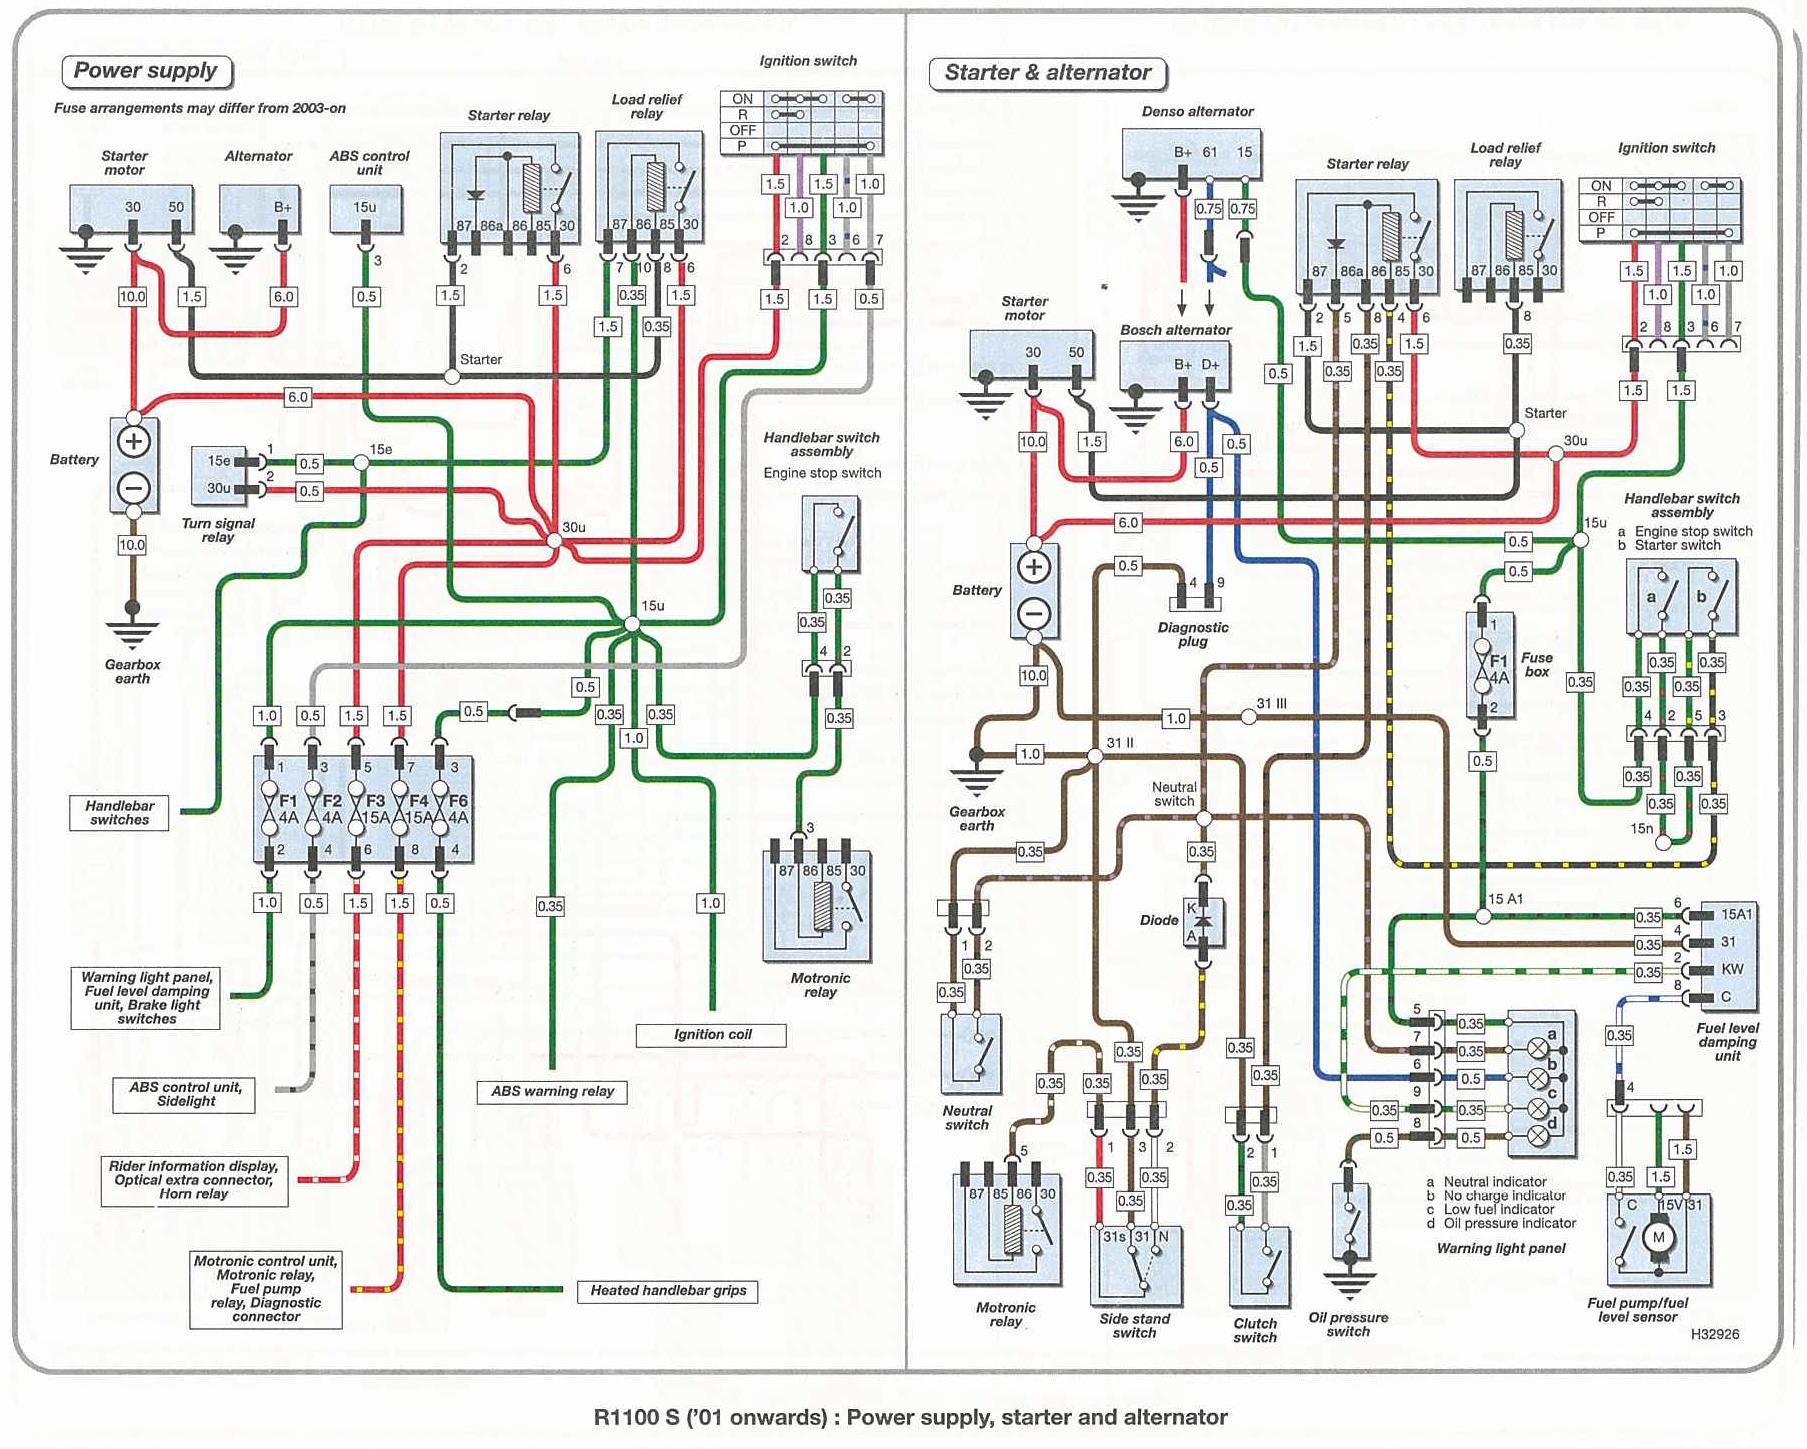 Bmw f650gs electrical wiring diagram #2